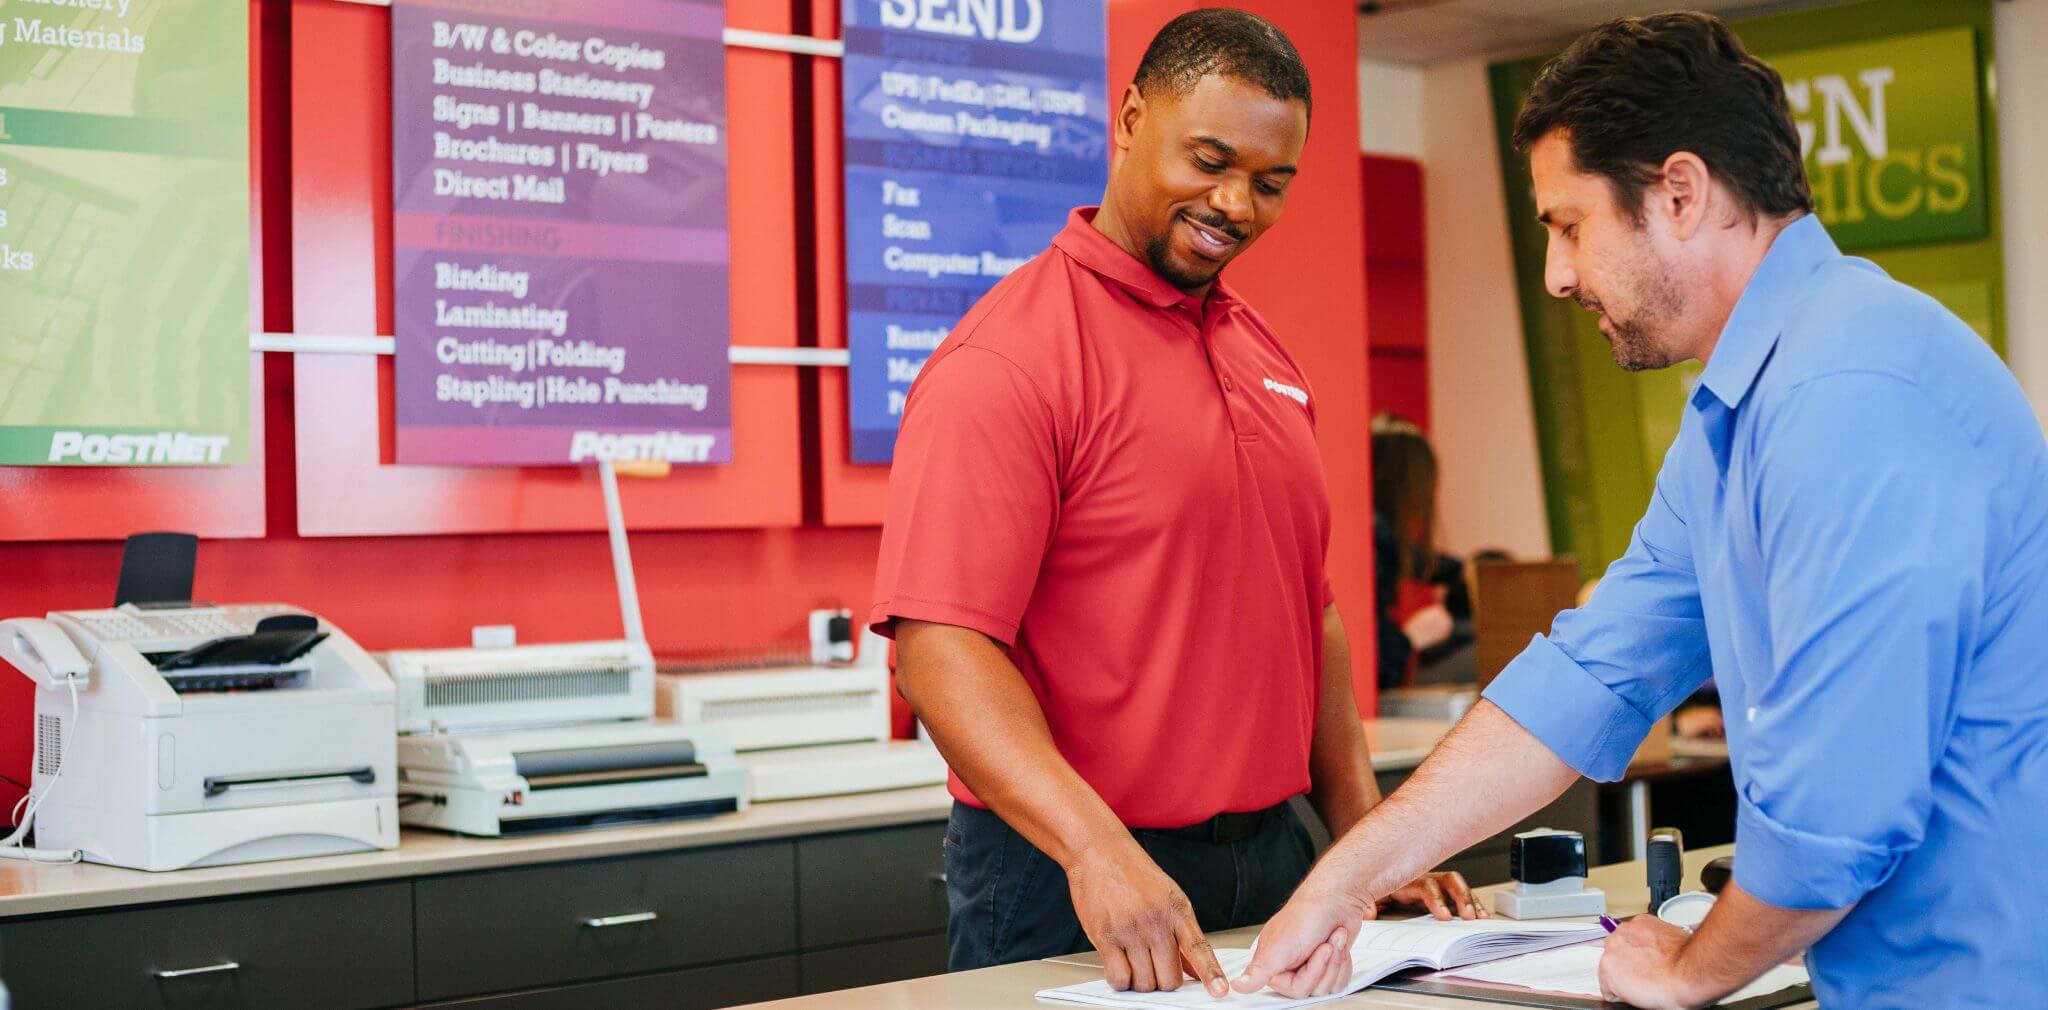 Employee helping customer with printing needs